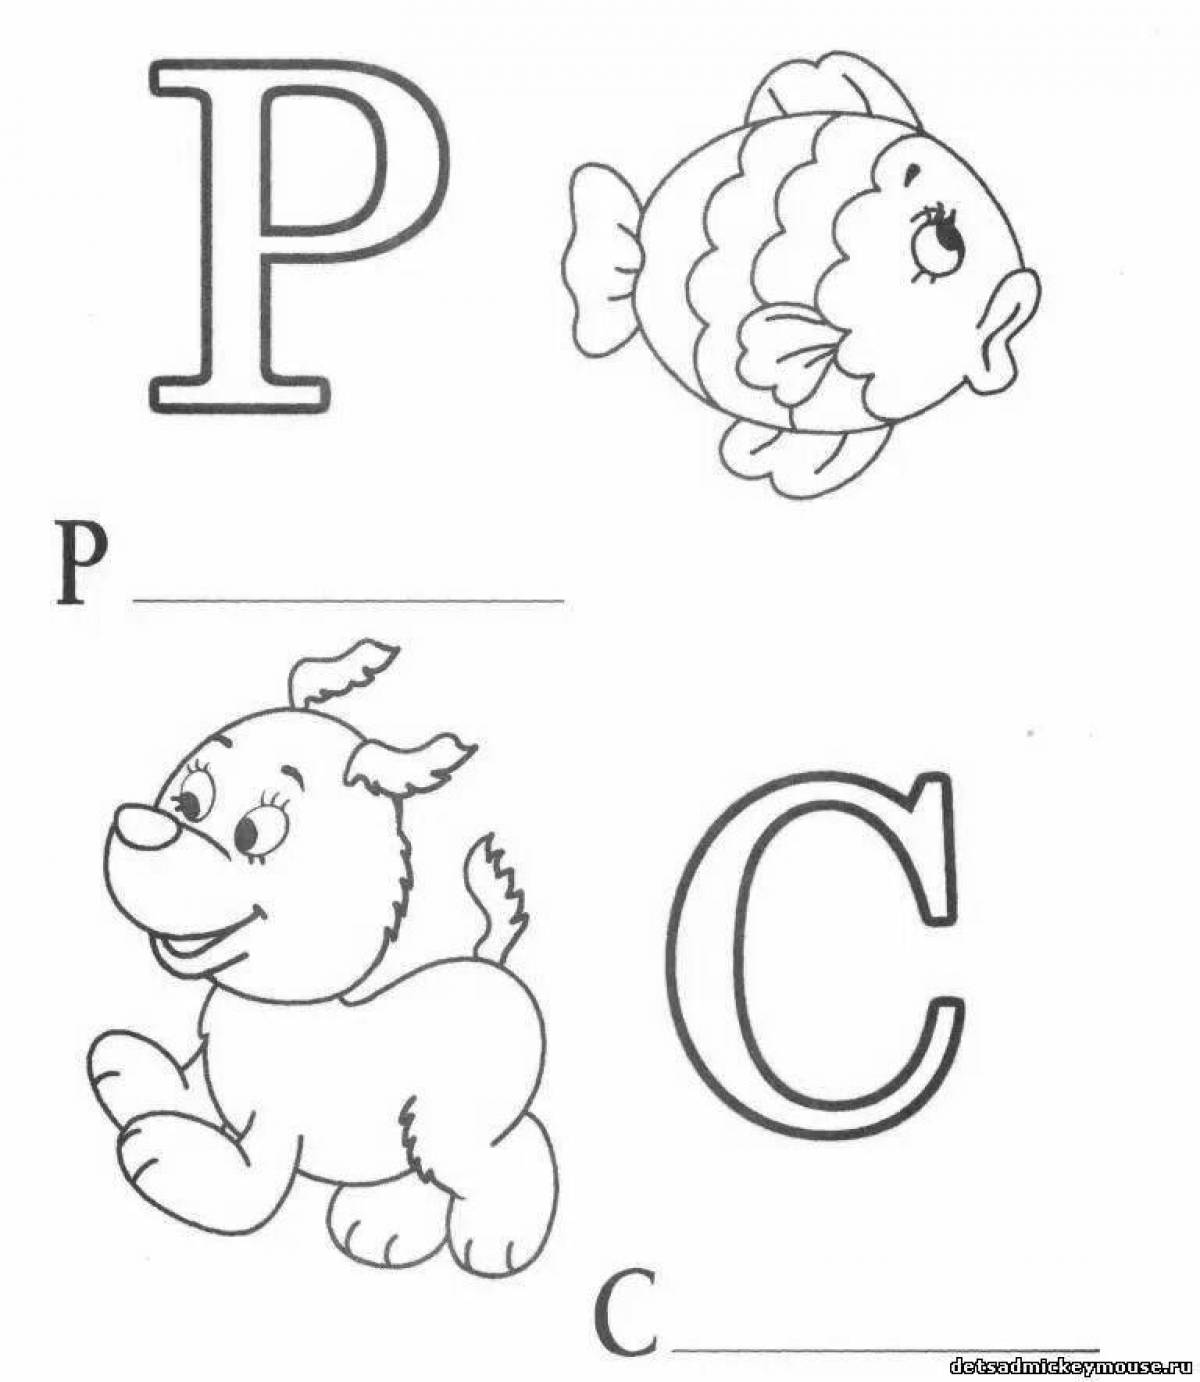 Alphabet for children 5 6 years old #11